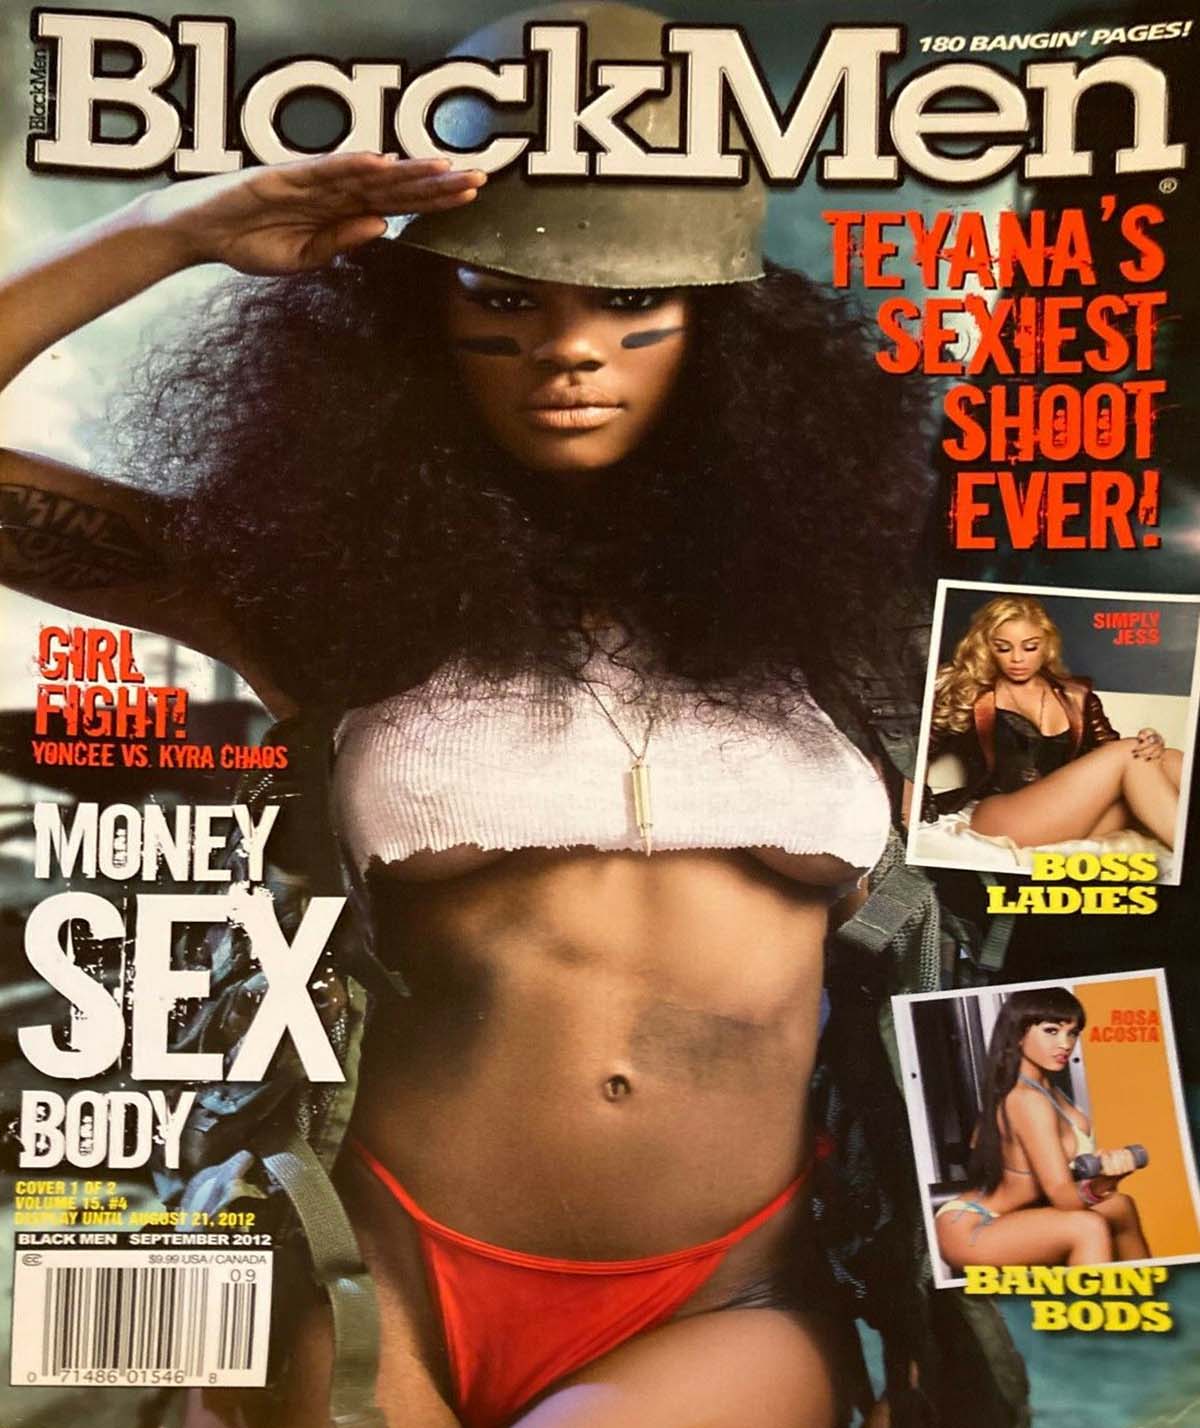 Black Men September 2012 magazine back issue Black Men magizine back copy 